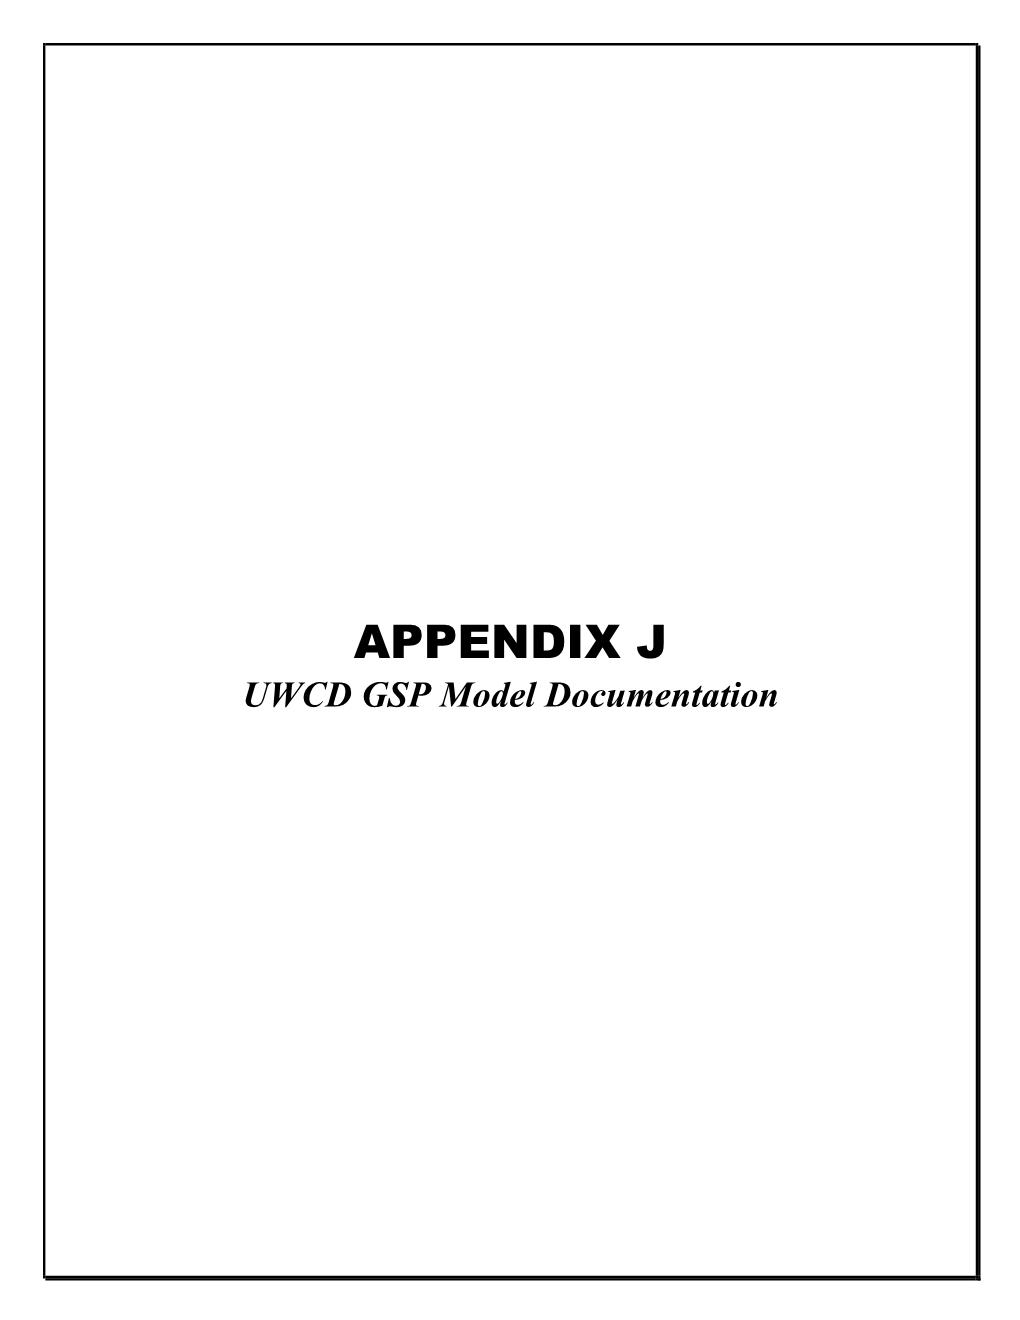 APPENDIX J UWCD GSP Model Documentation